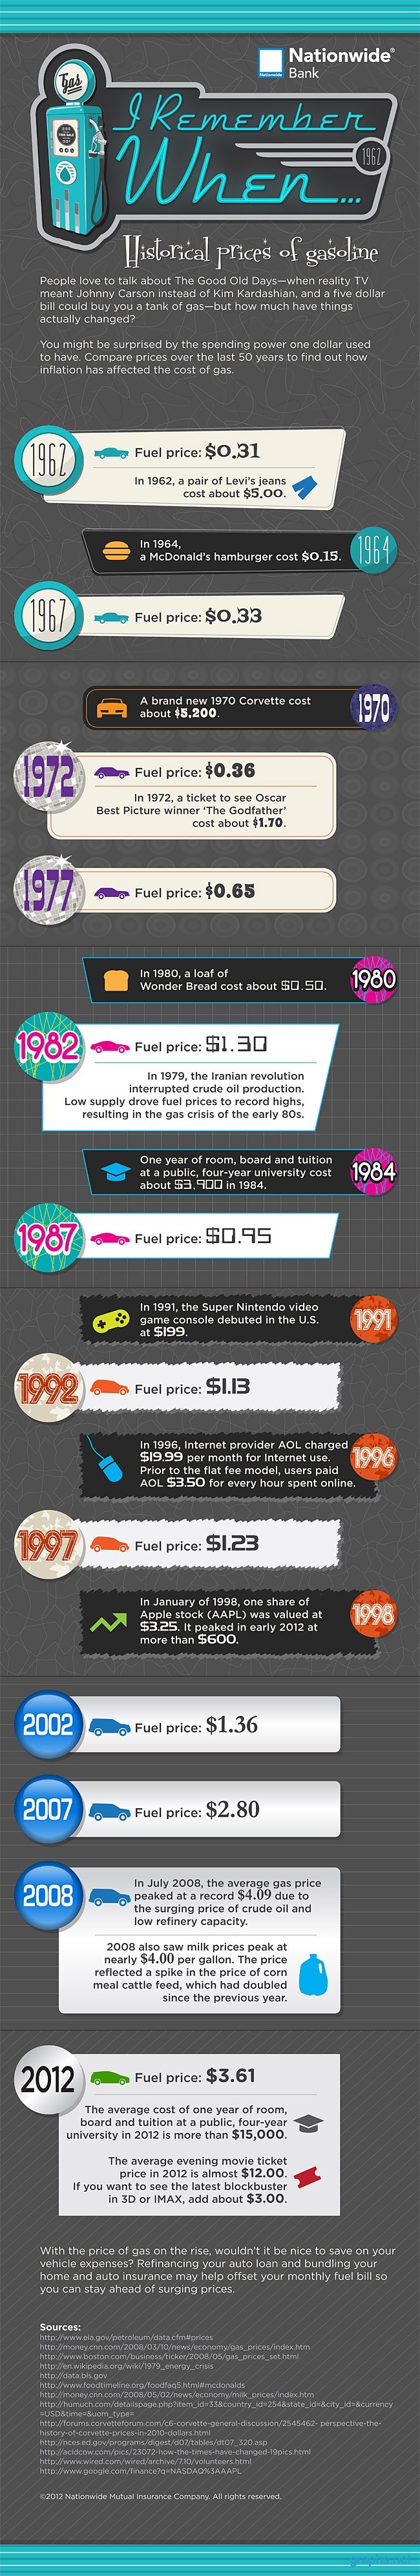 fuel price history chart